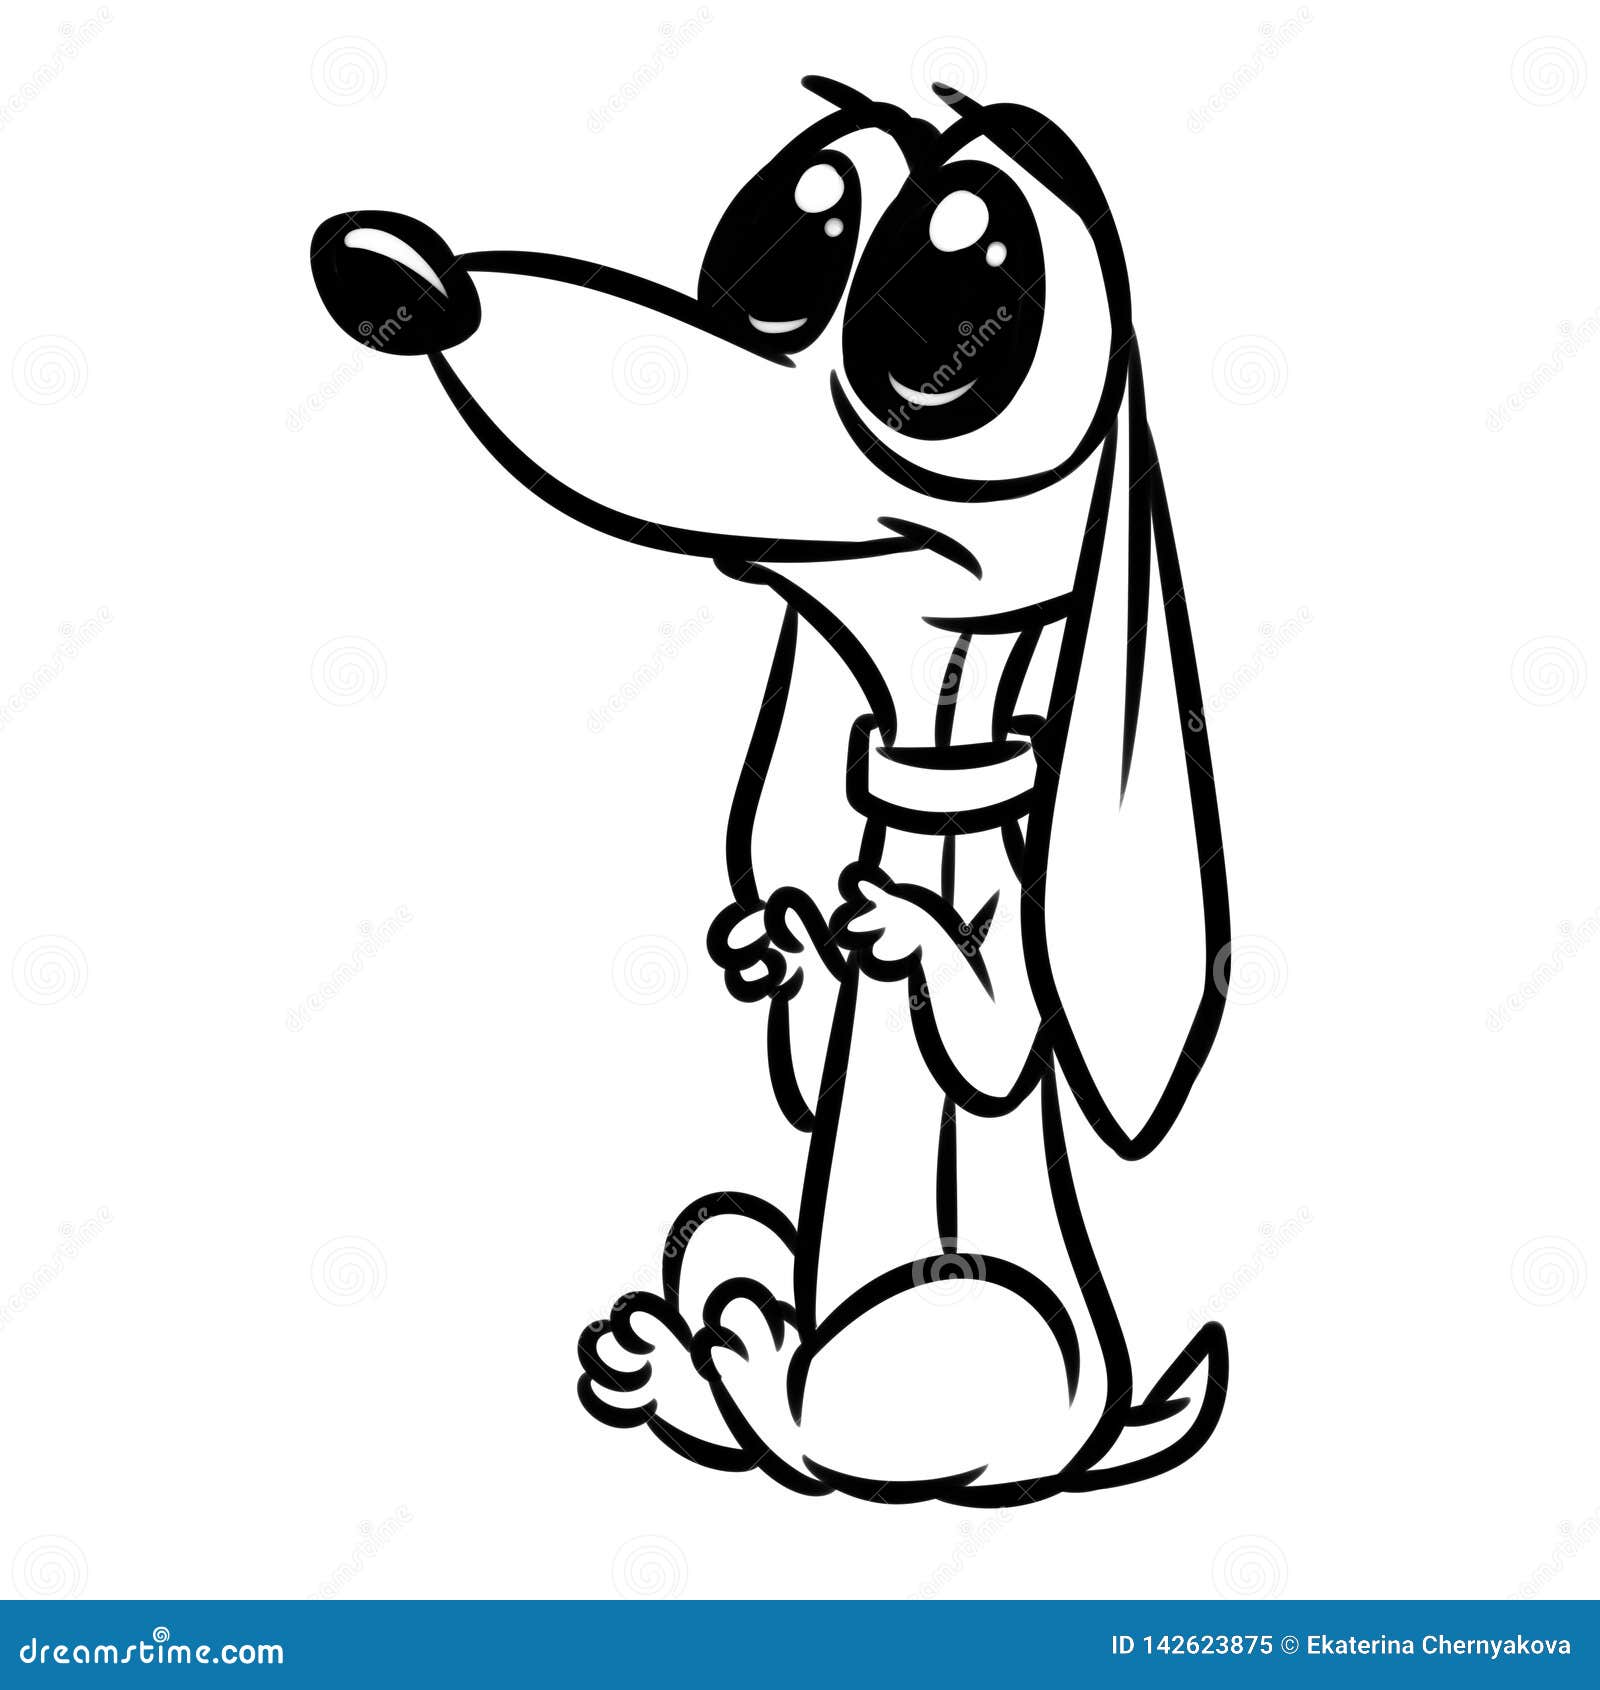 Dog Big Eyes Cartoon Coloring Page Stock Illustration ...